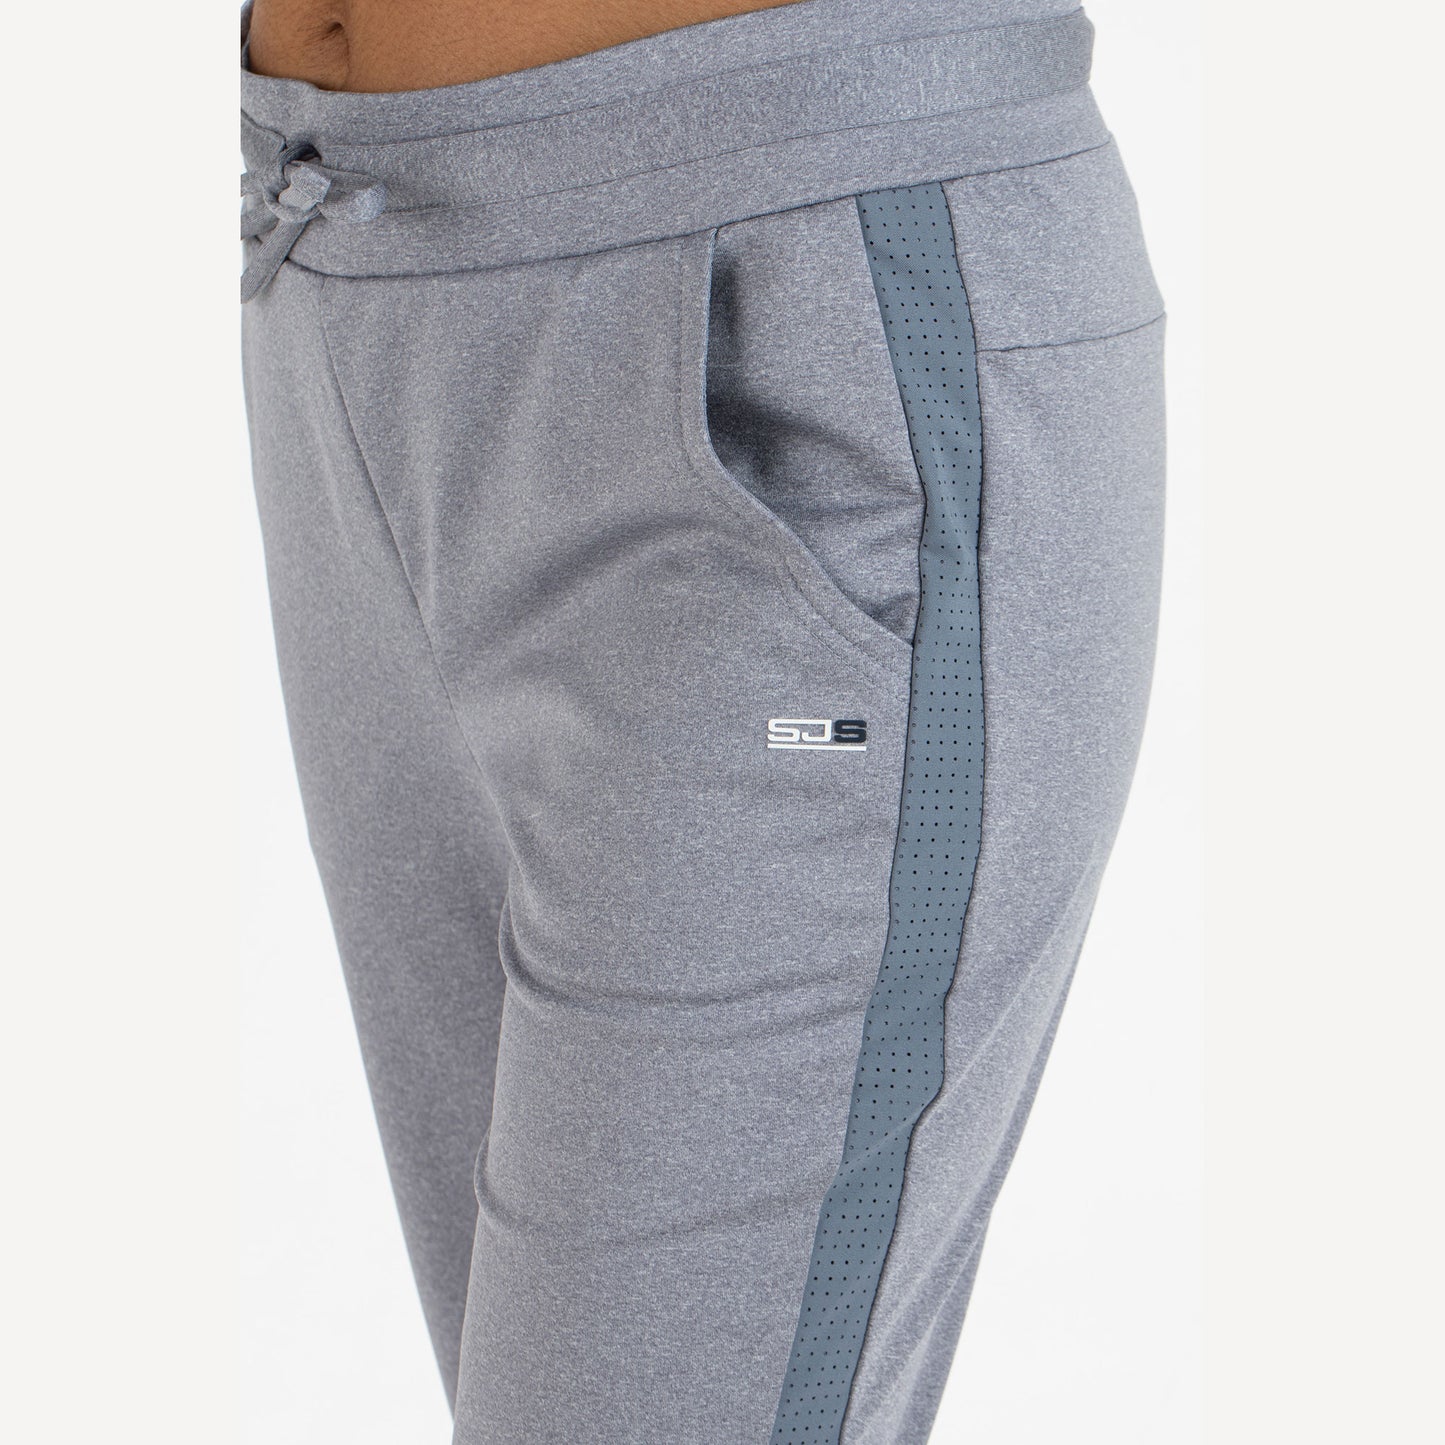 Sjeng Sports Gila Women's Tennis Pants Grey (3)